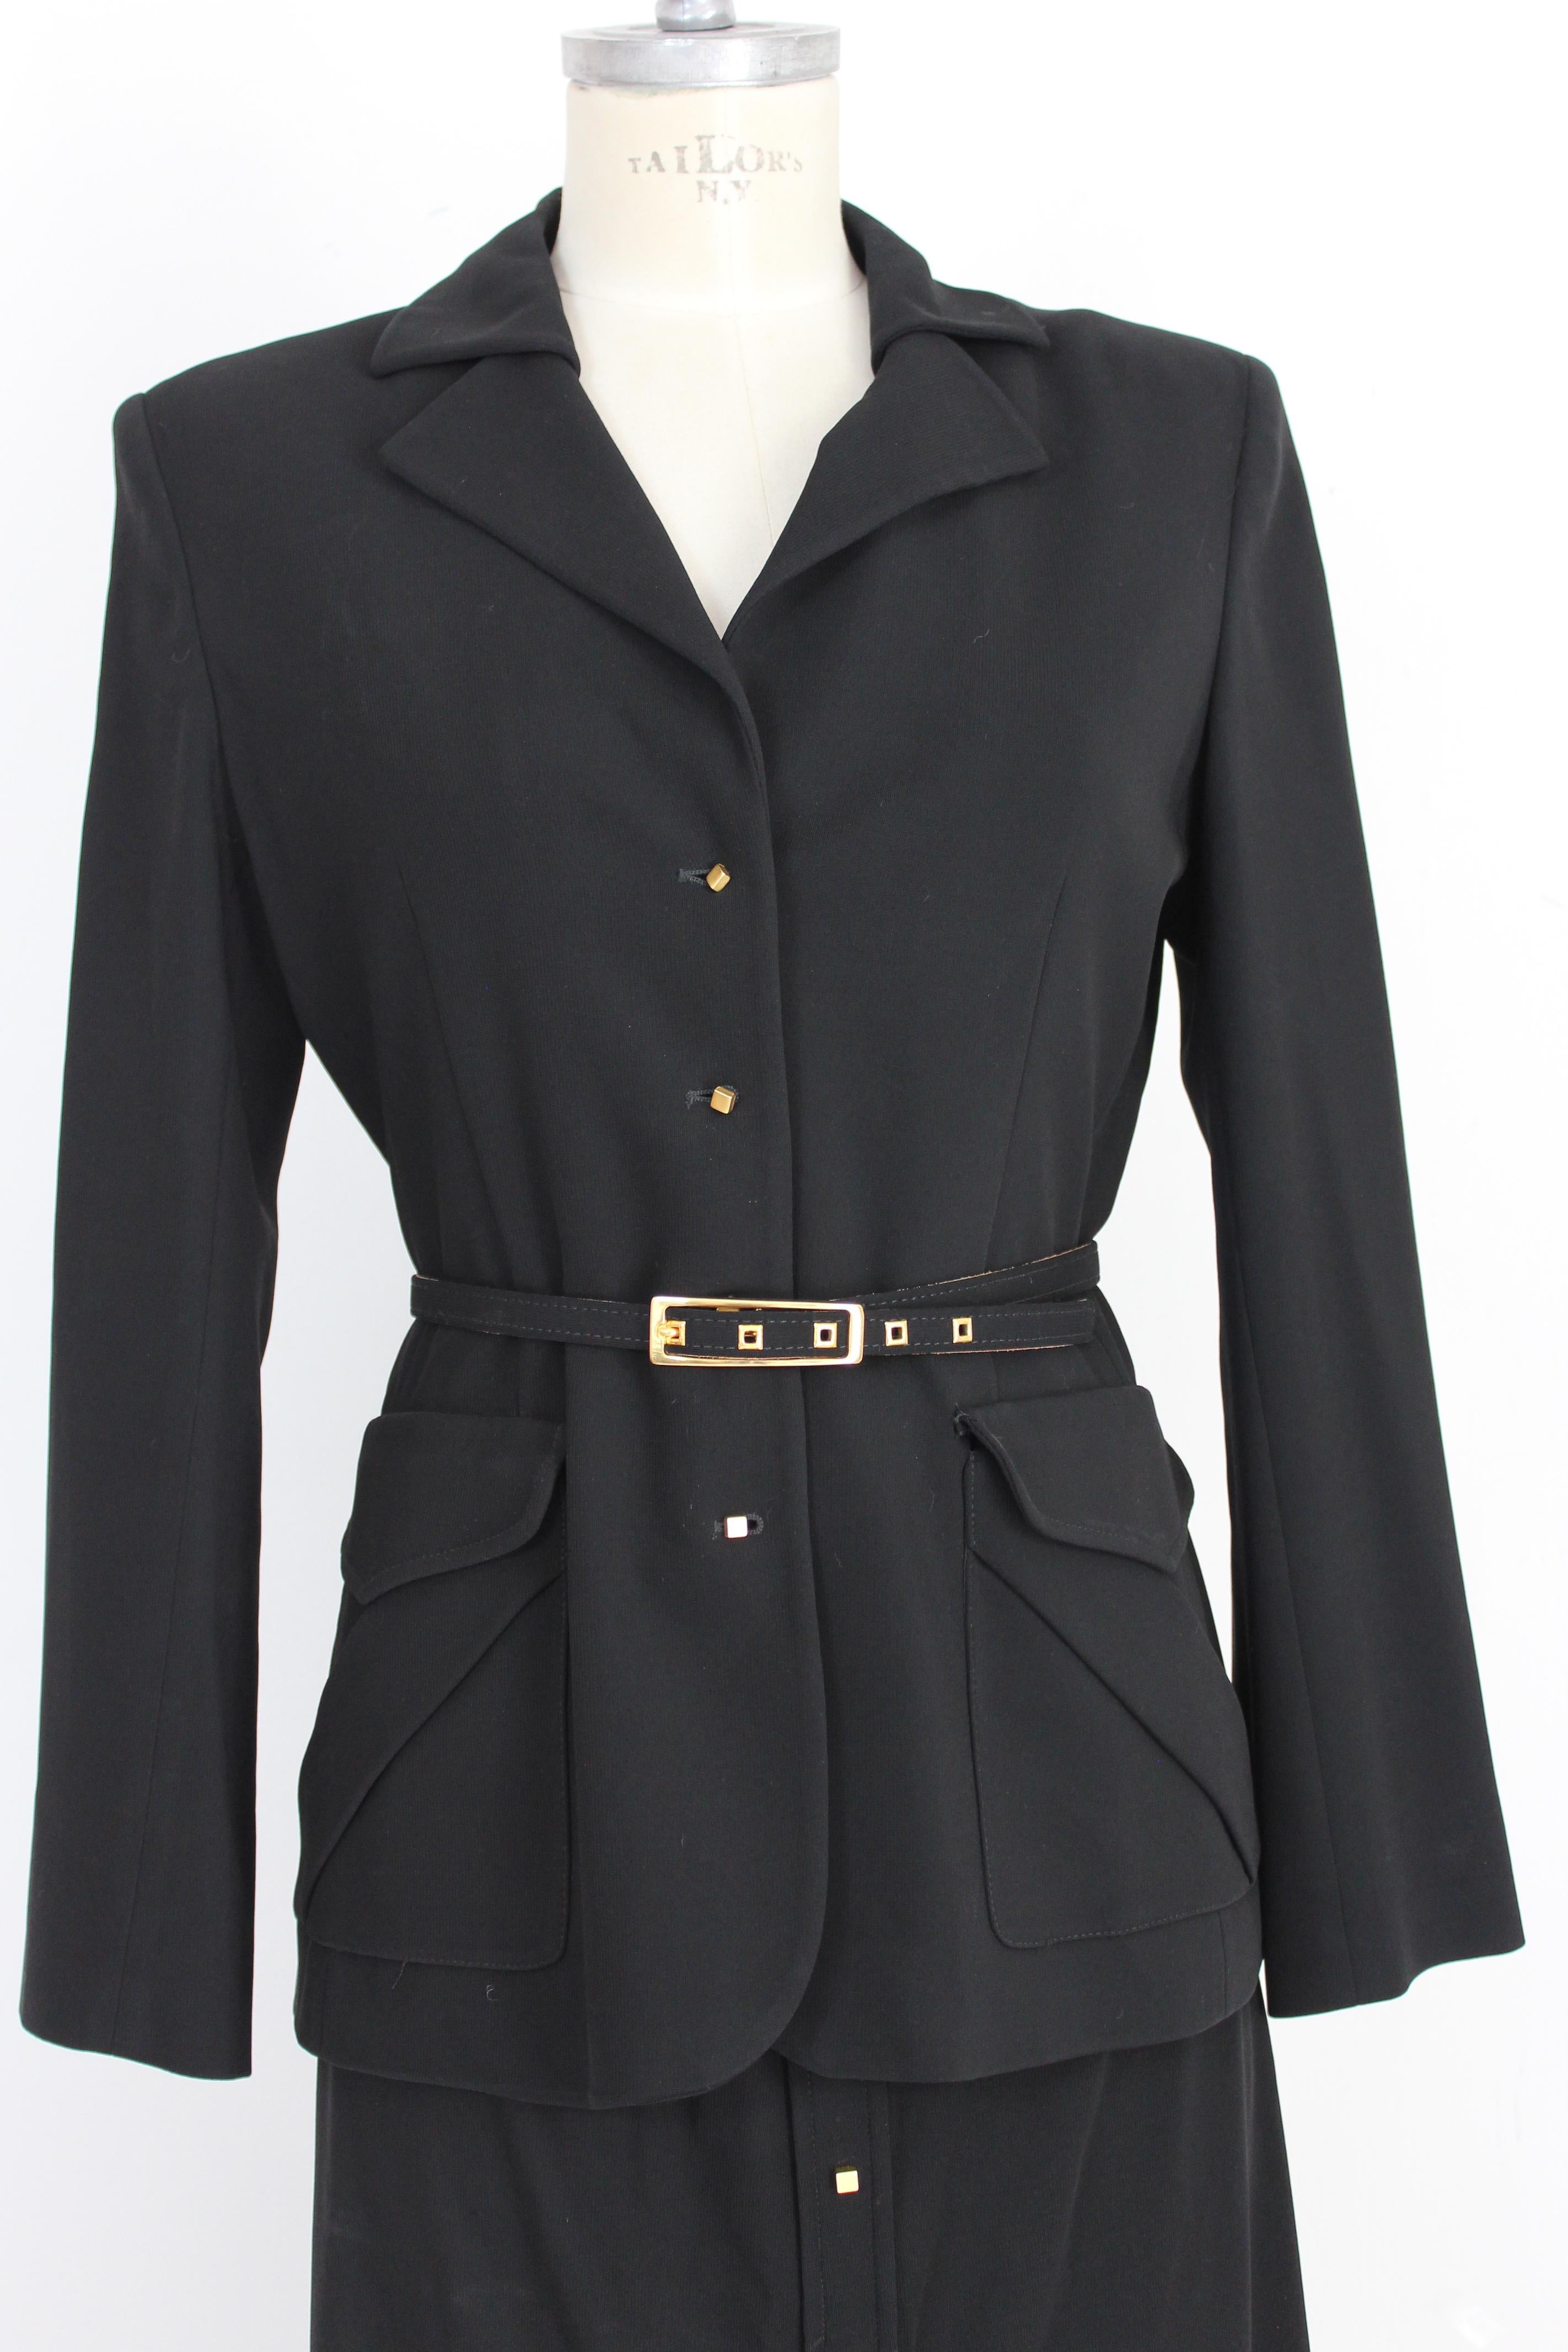 Genny Black Gold Viscose Evening Suit Skirt and Jacket 2